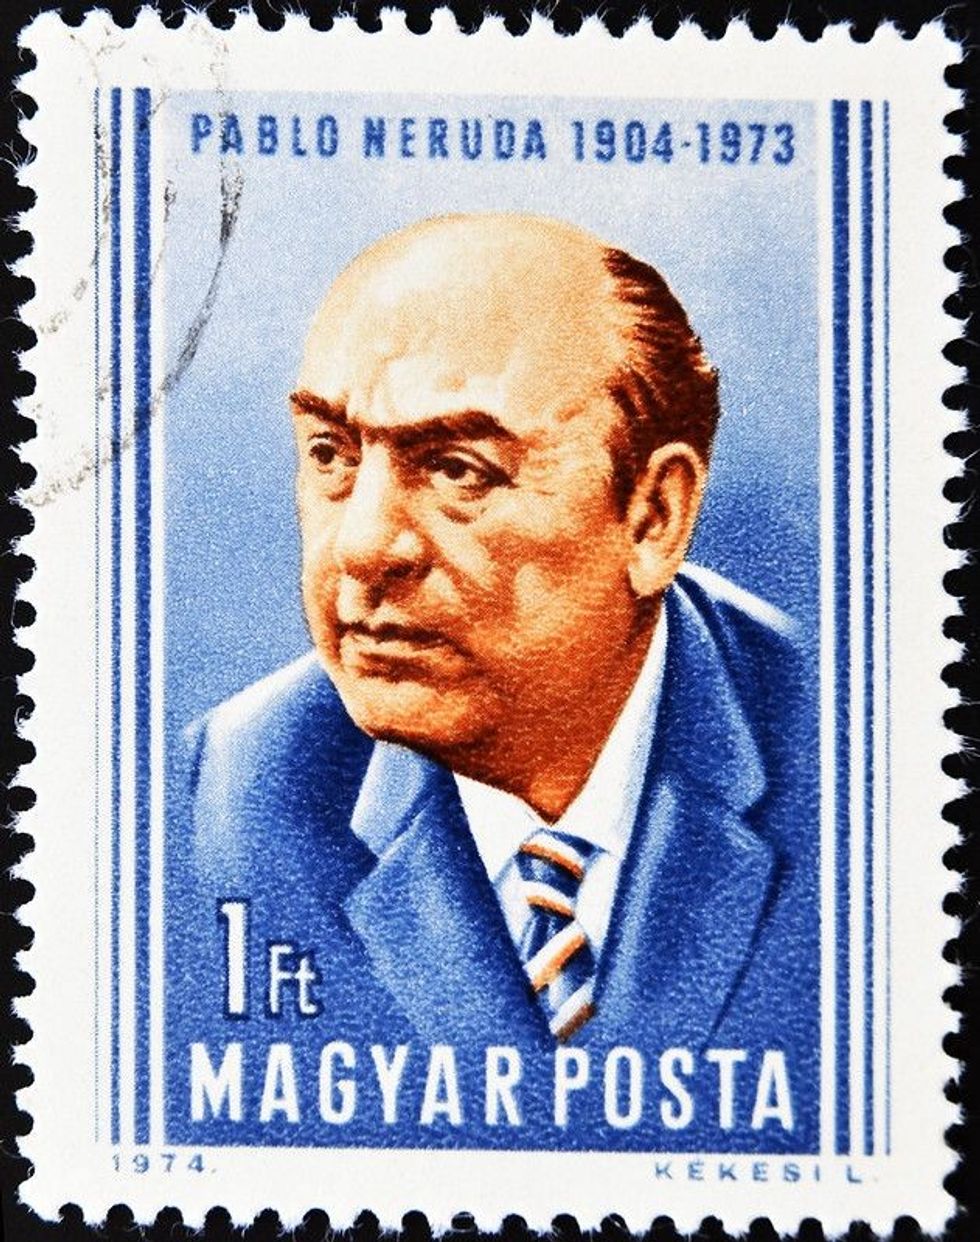 Pablo Neruda image on a ticket